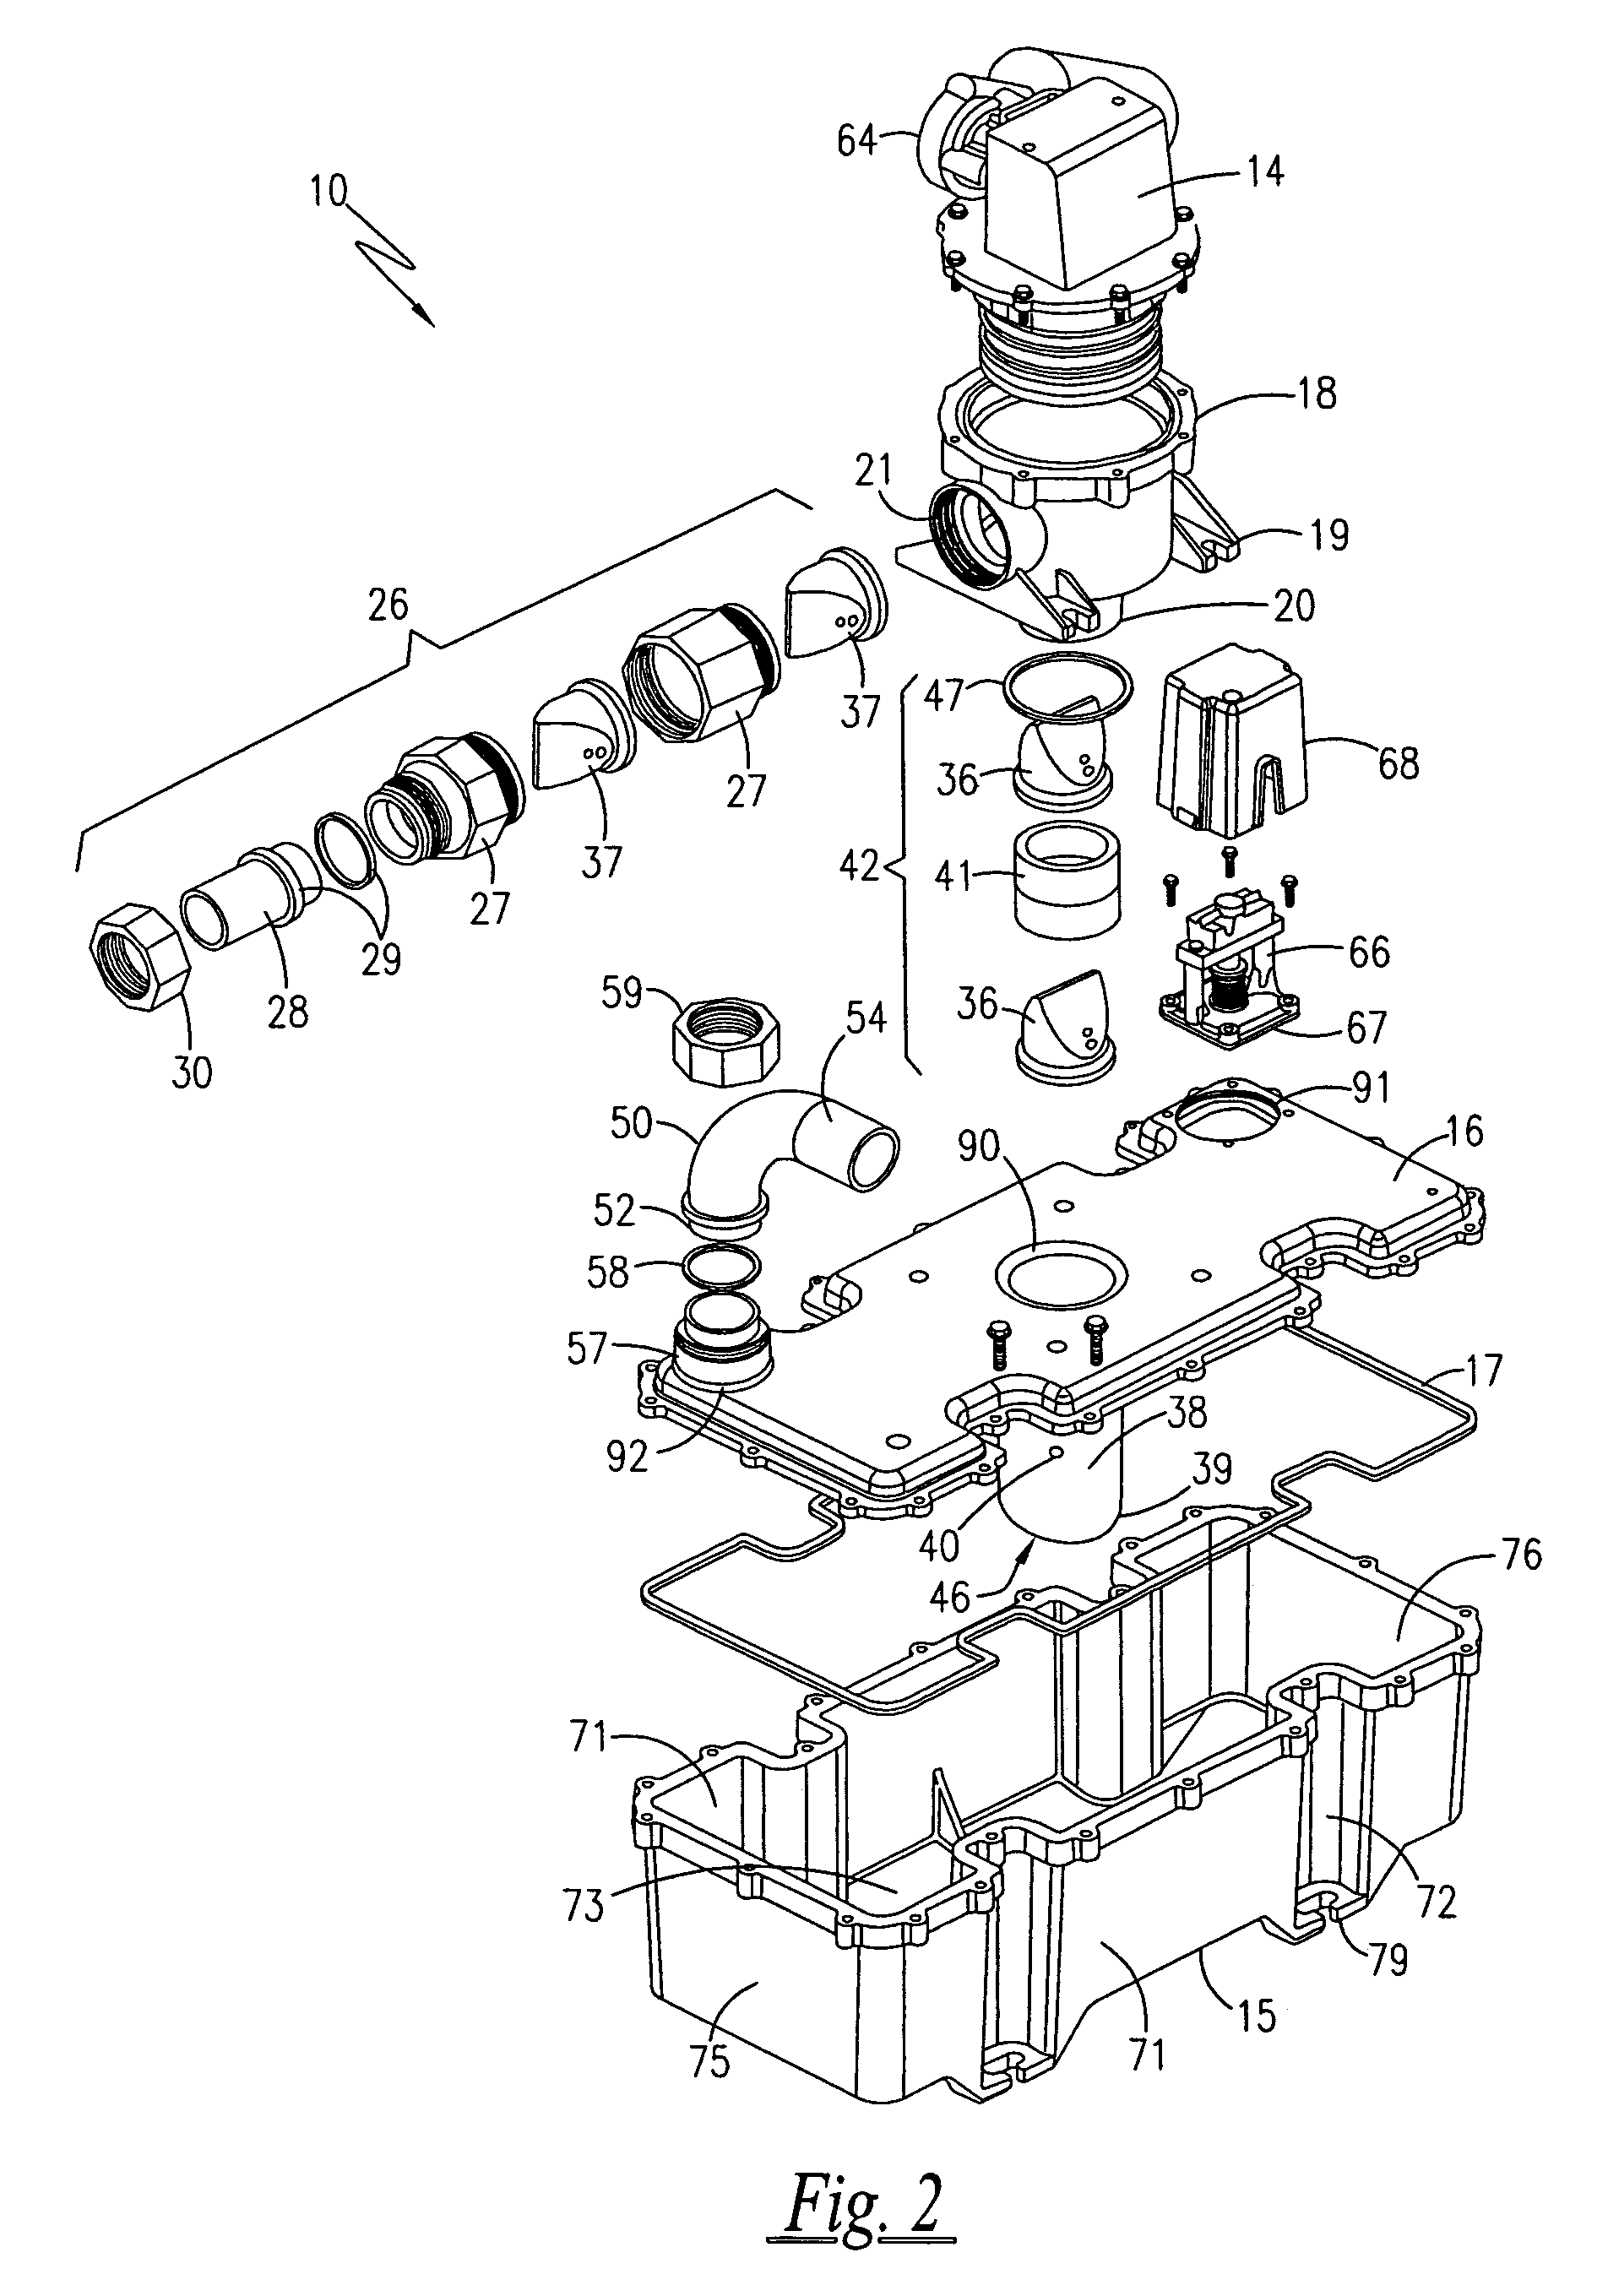 Vacuum tank assembly